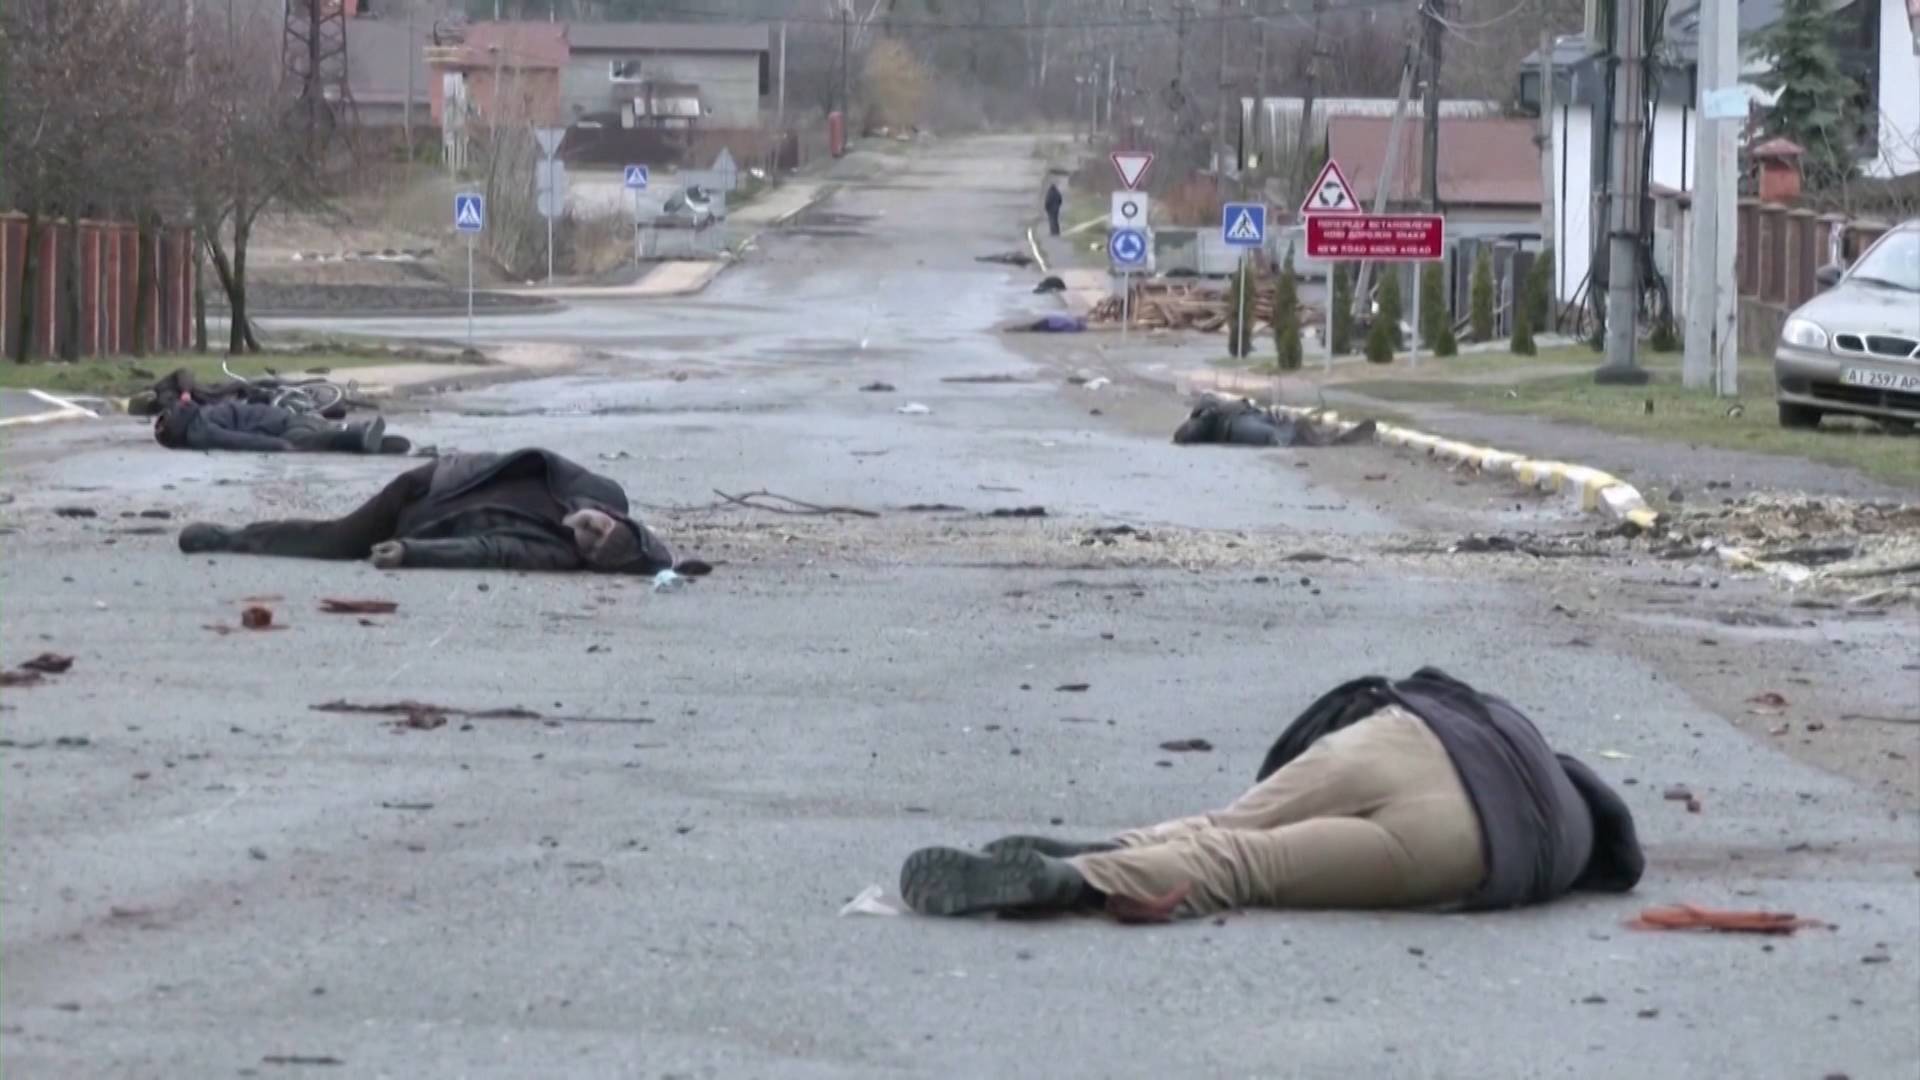 Ukraine Accuses Russia of War Crimes as Photographs Show Bucha’s Atrocities